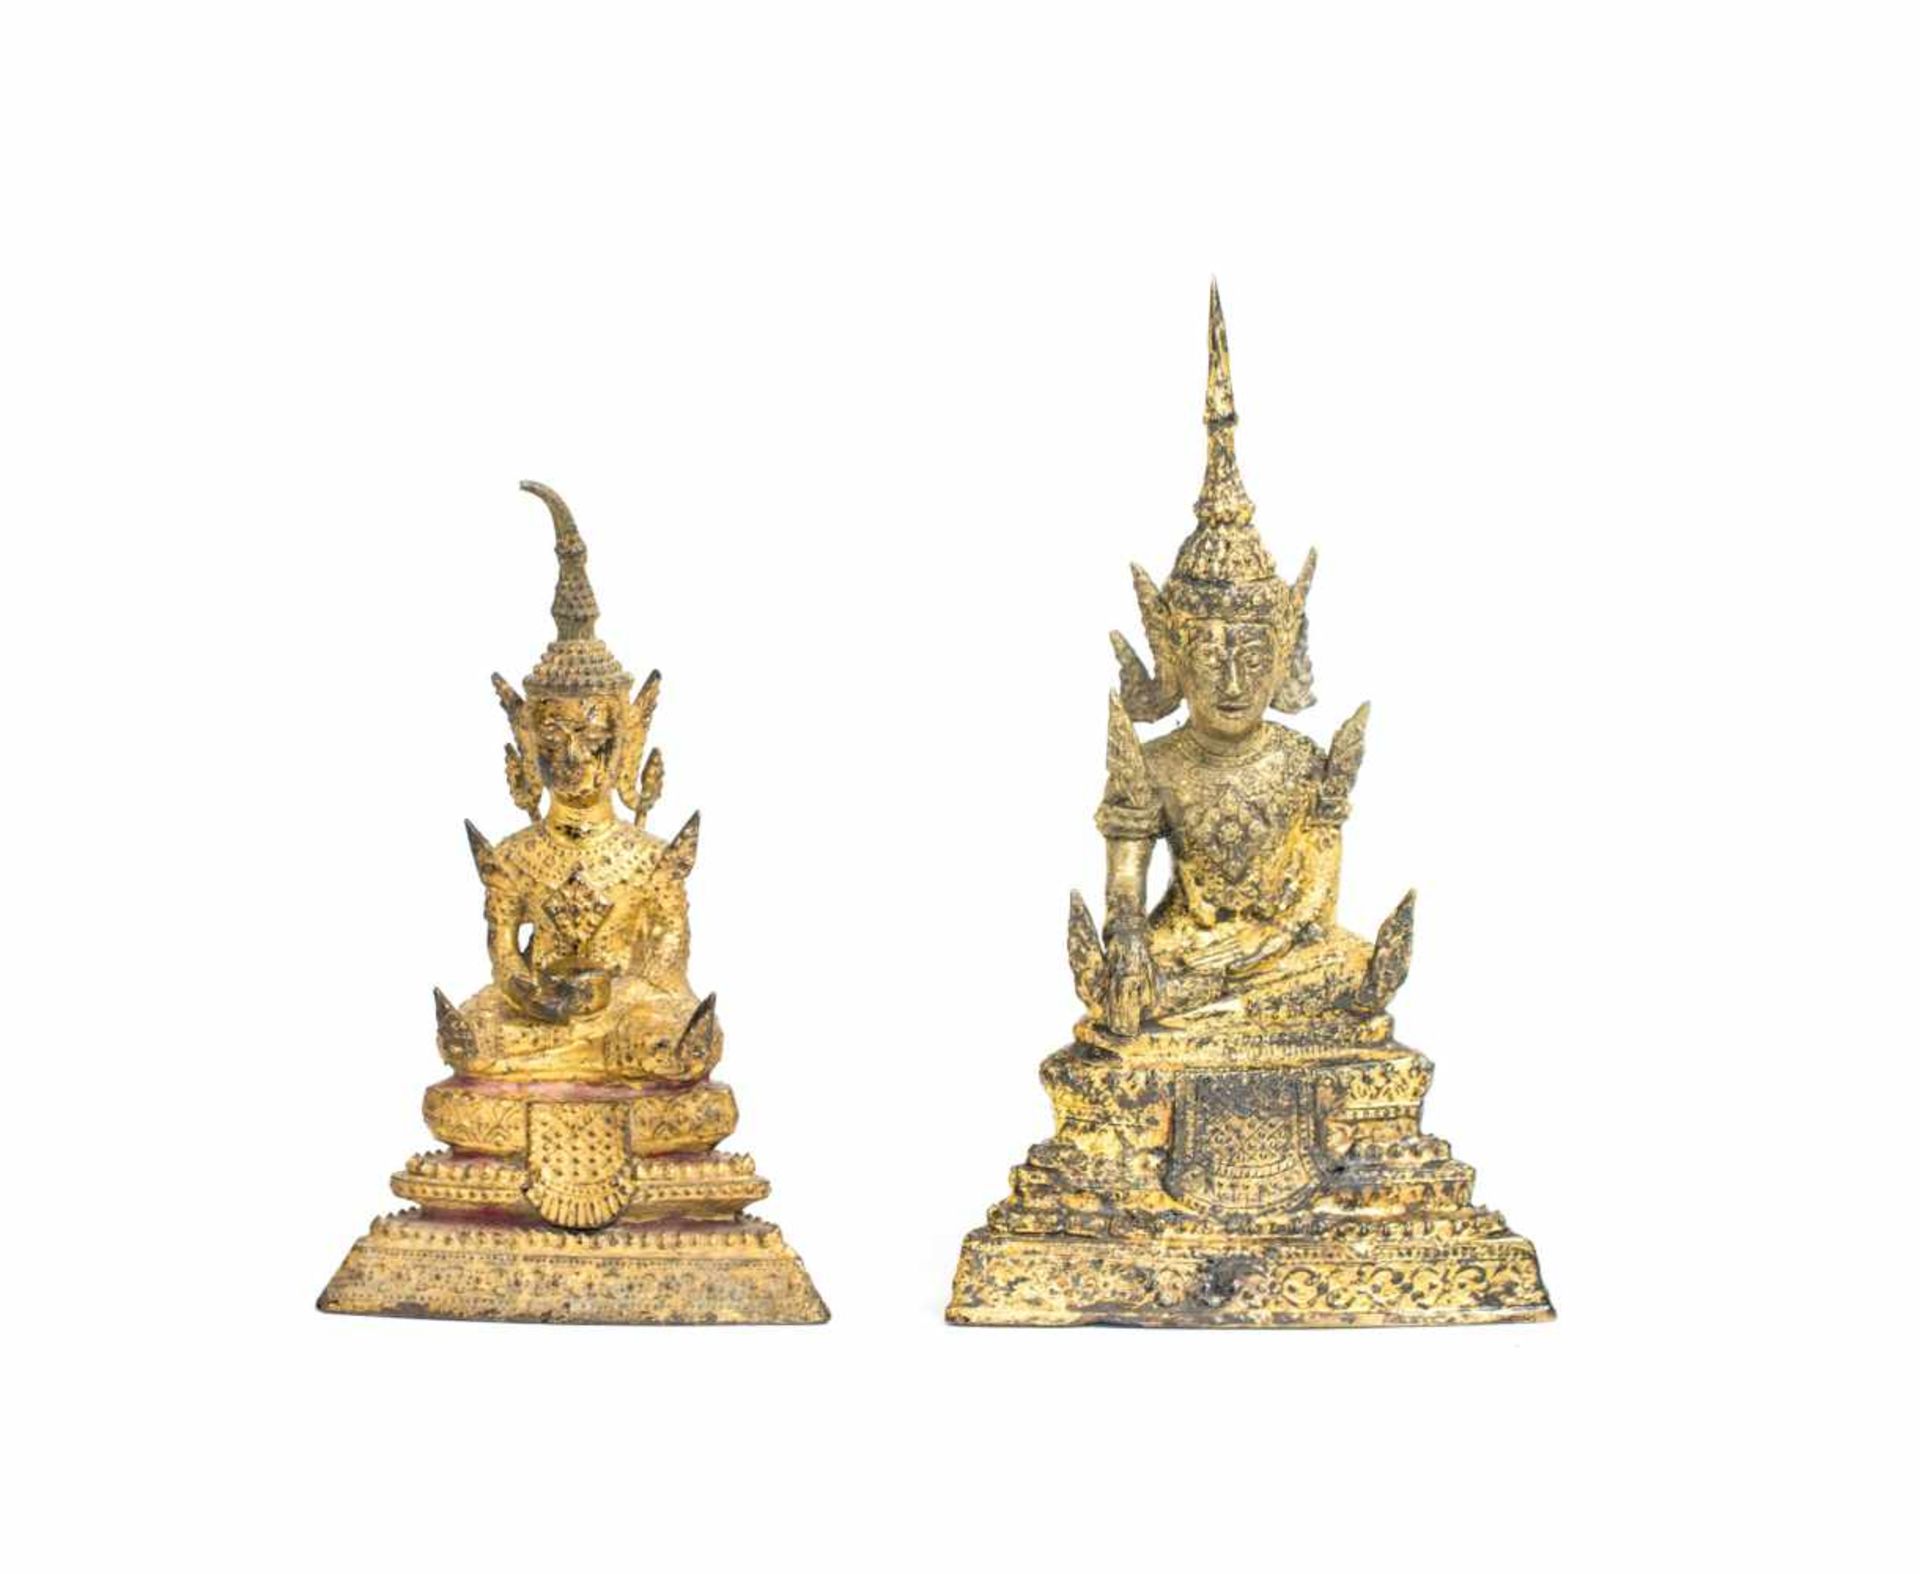 2 Rattanakosin-BuddhasThailand, um 1900, Bronzeguss in verlorener Form, Vergoldung auf roter